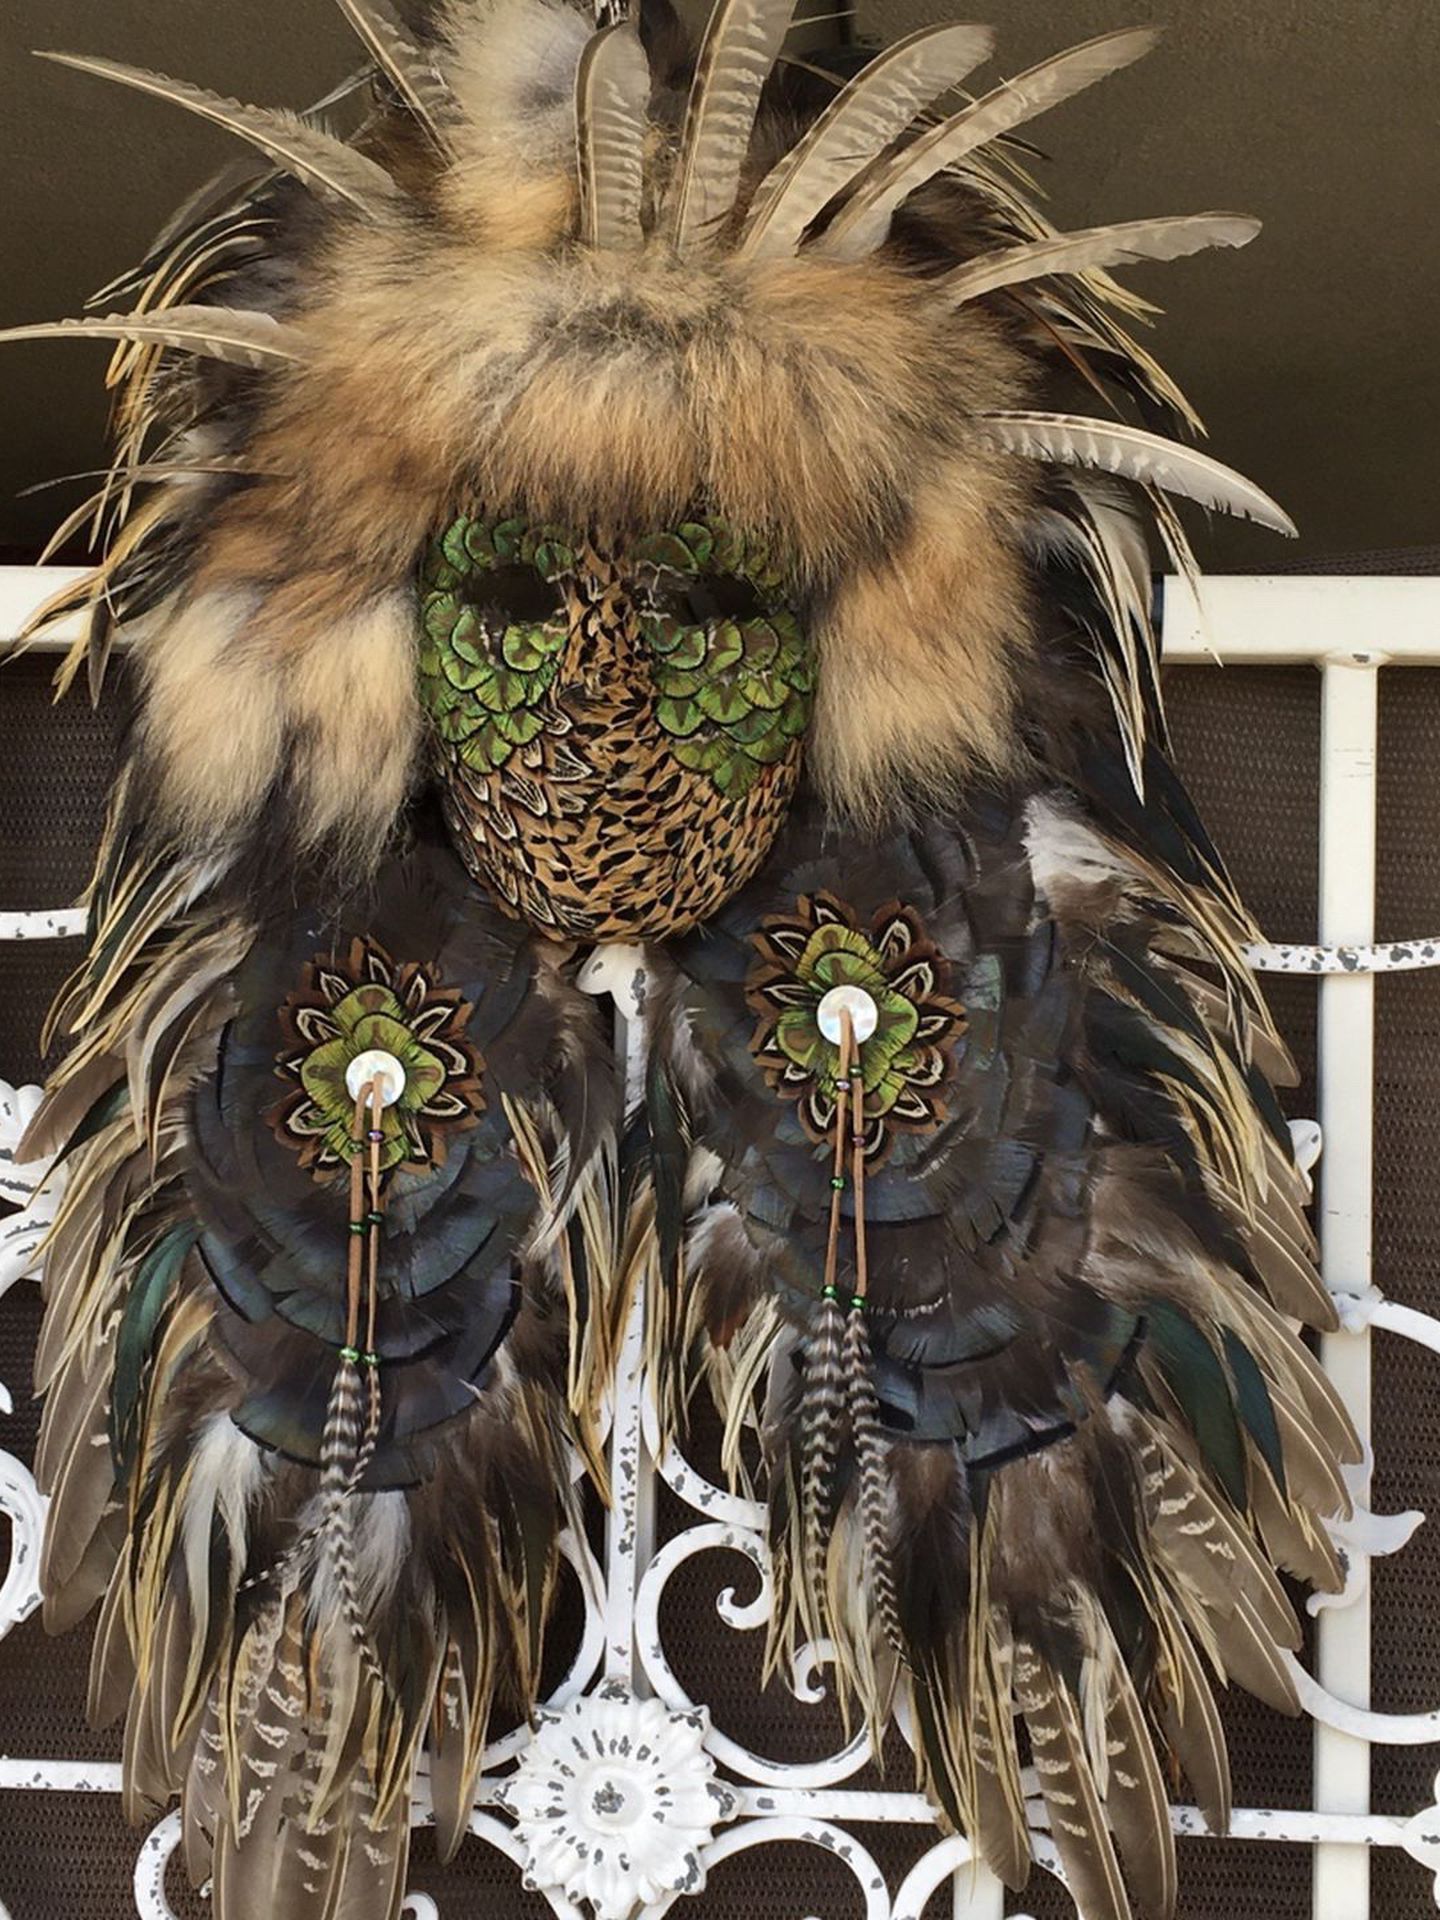 Handmade Feather Headdress Mask $200.00 OBO